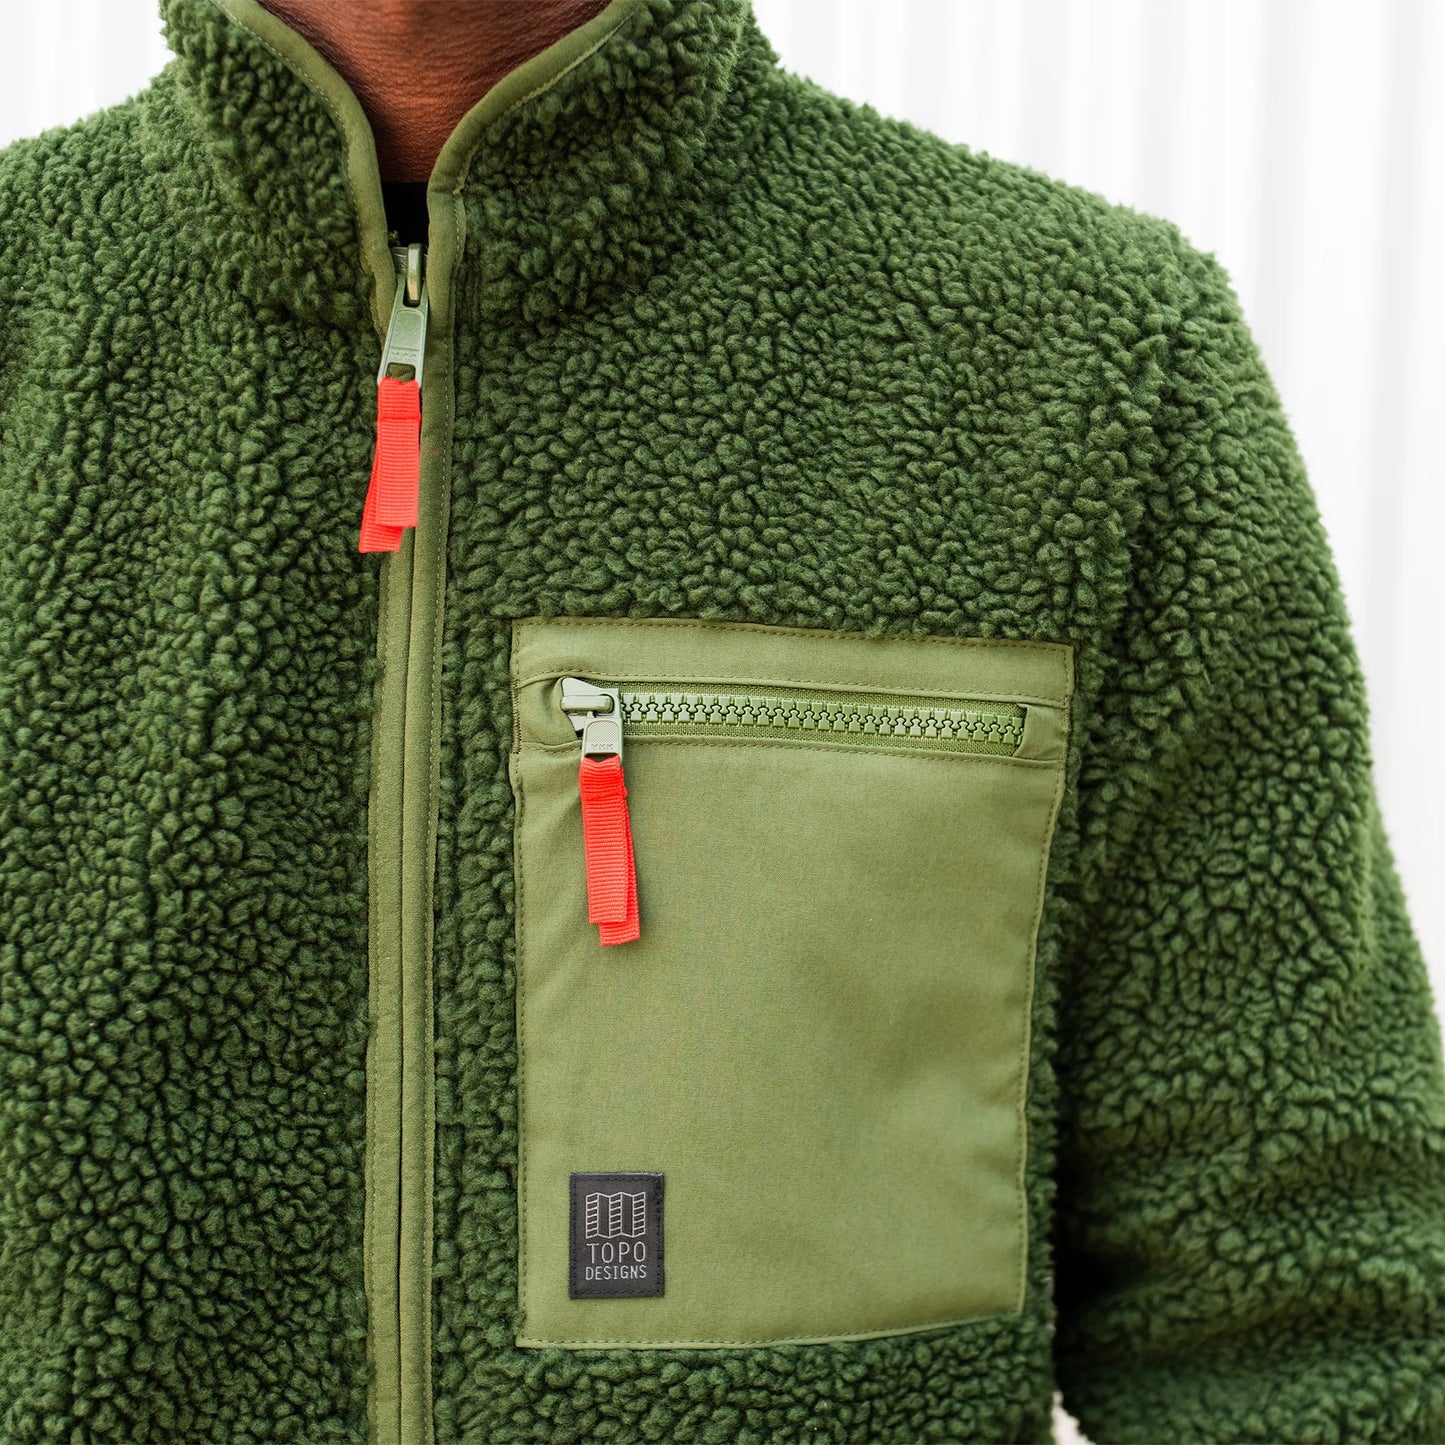 Men's Reversible Sherpa Fleece Jacket - Topo Designs